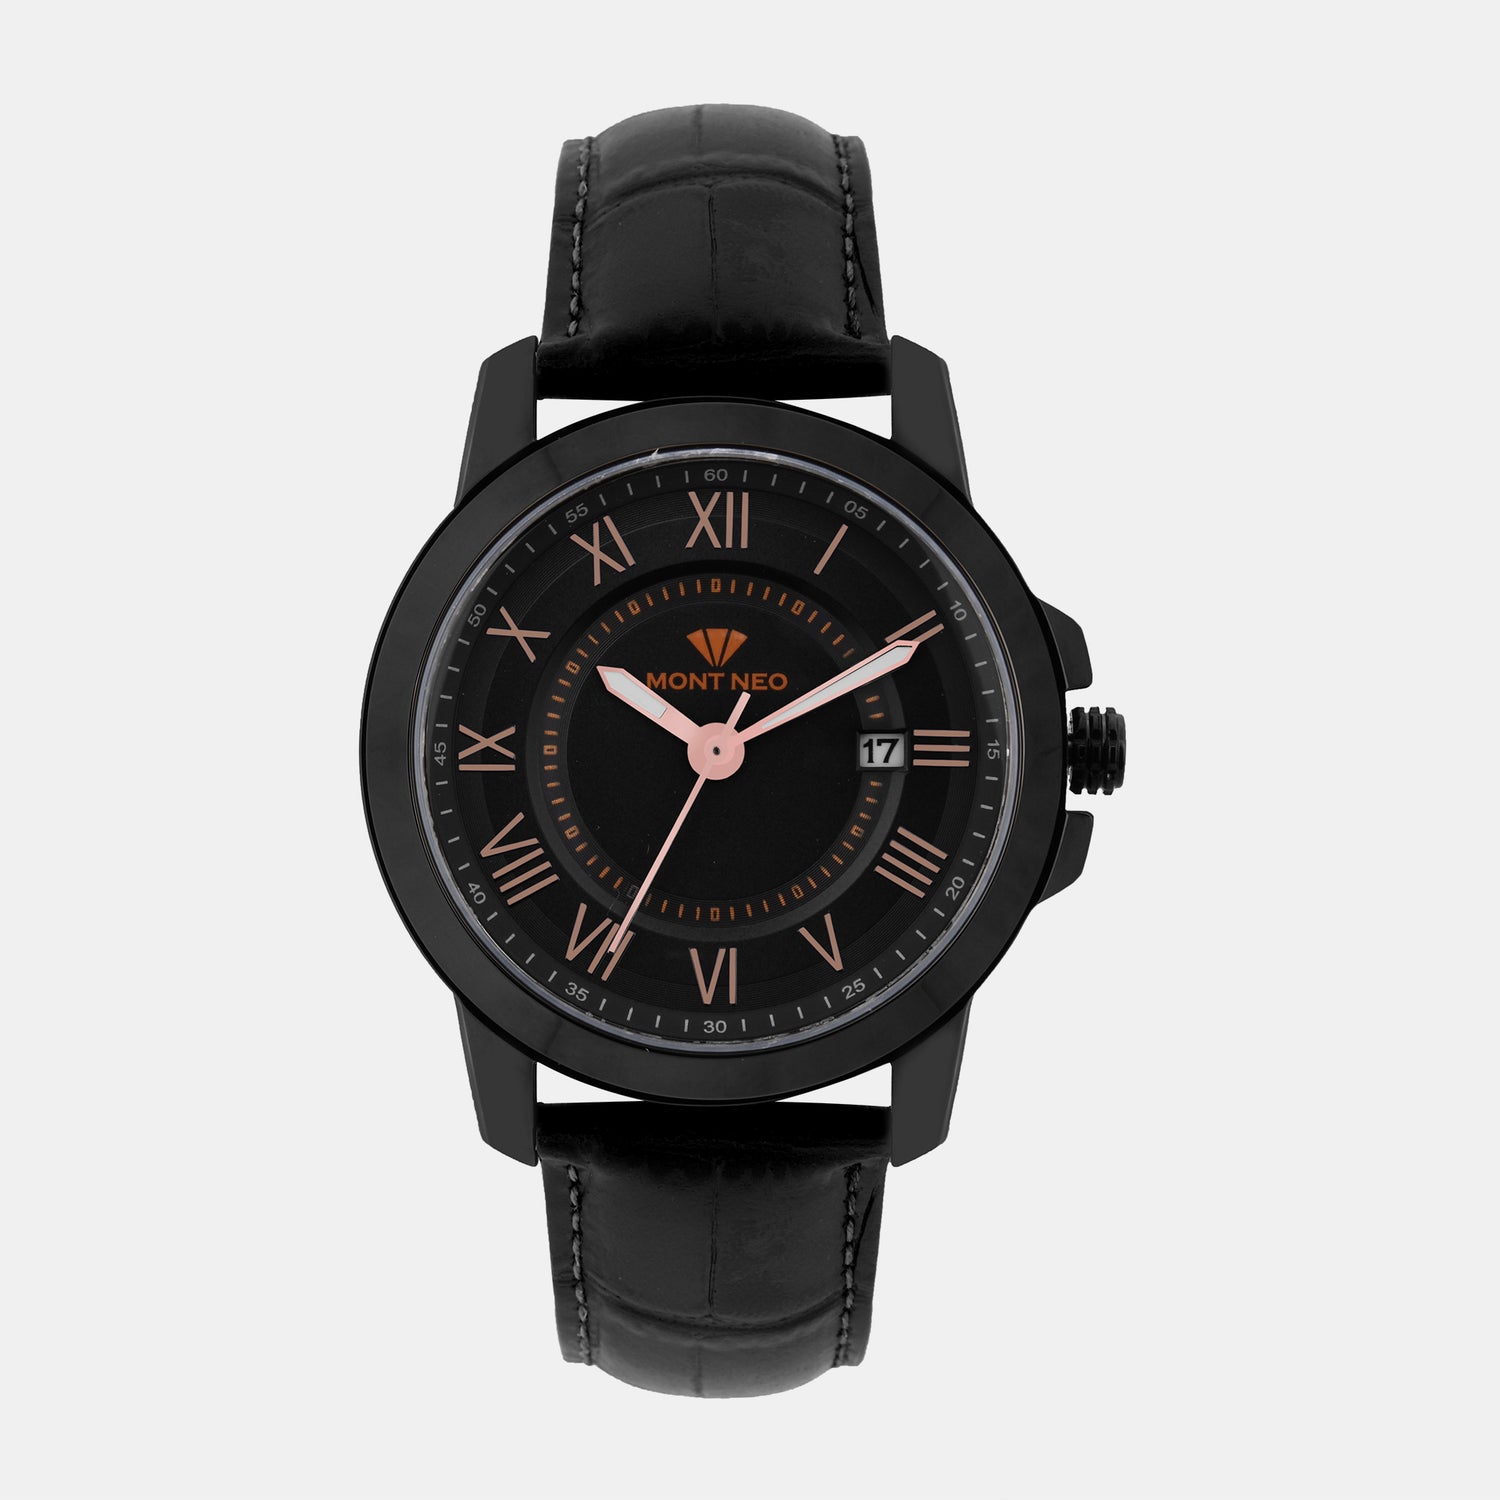 Male Black Analog Leather Watch 8002E-L4404-1